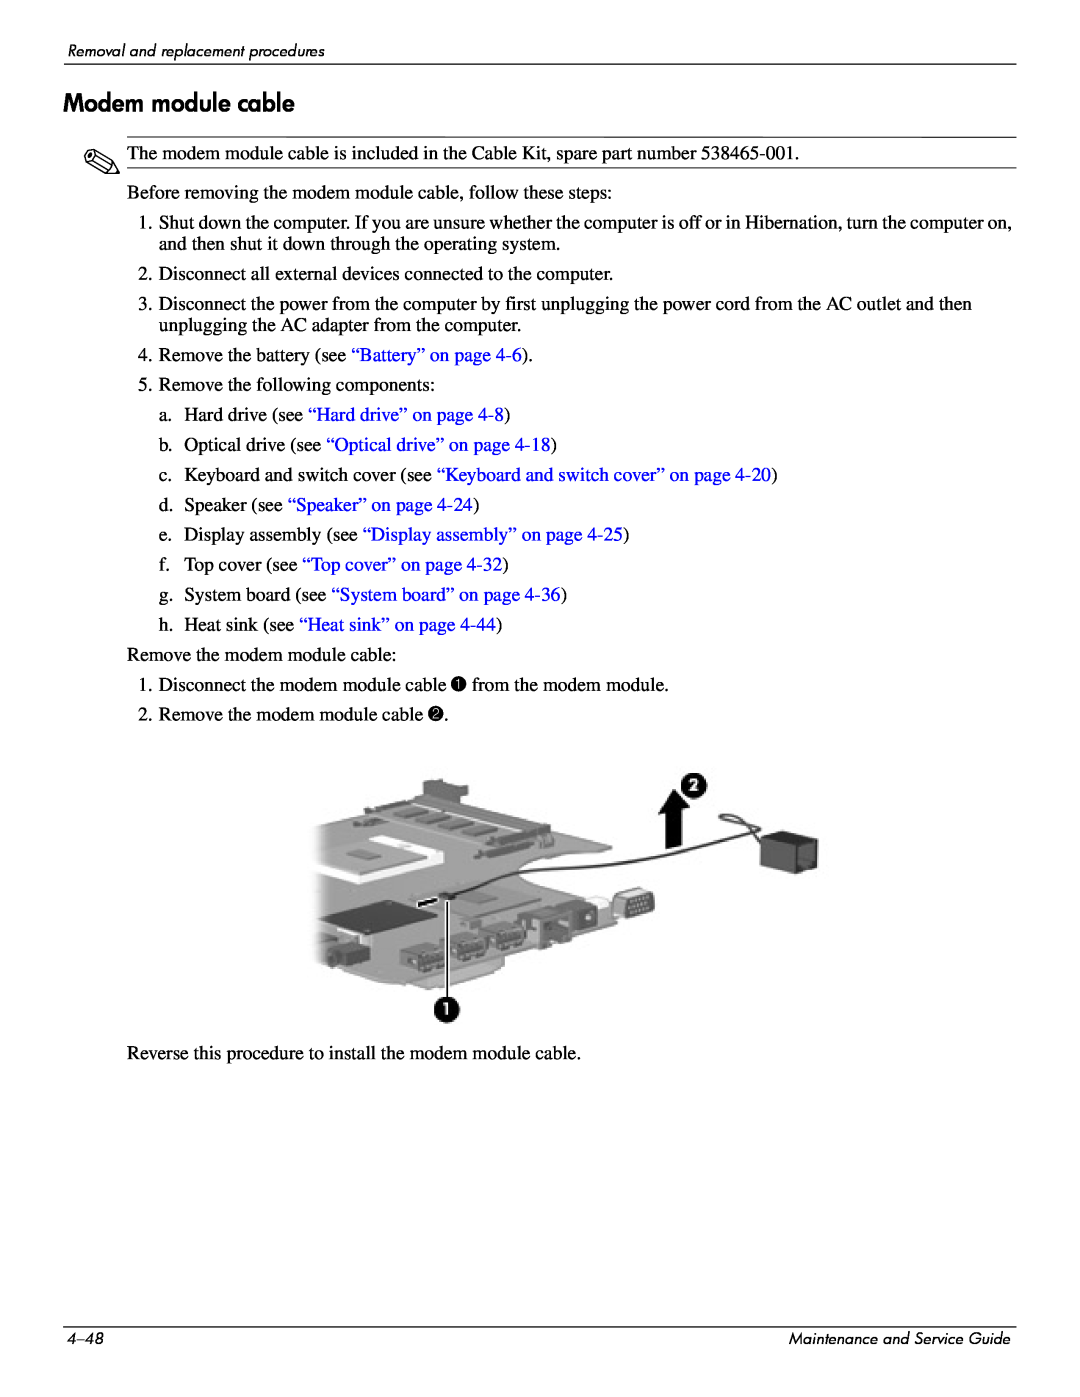 Compaq 510, 511, 515 manual Modem module cable, h. Heat sink see “Heat sink” on page, a. Hard drive see “Hard drive” on page 